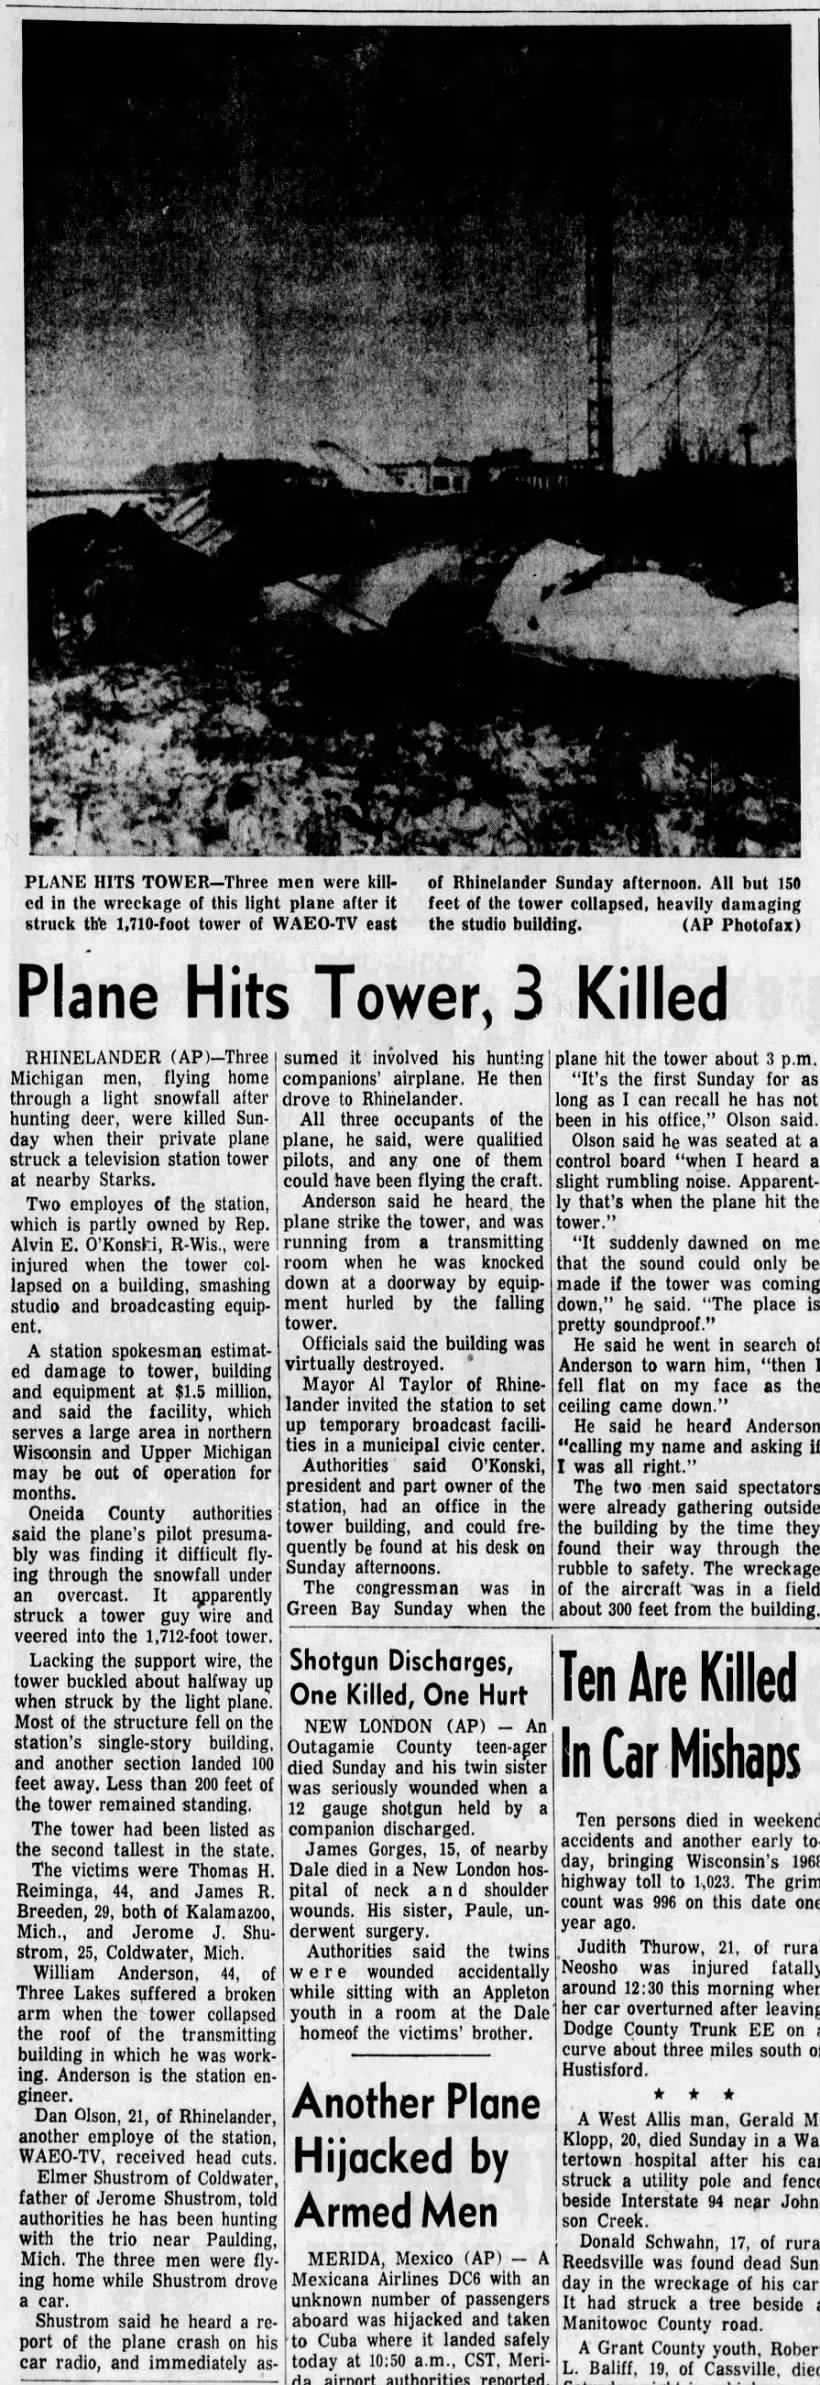 Plane Hits Tower, 3 Killed